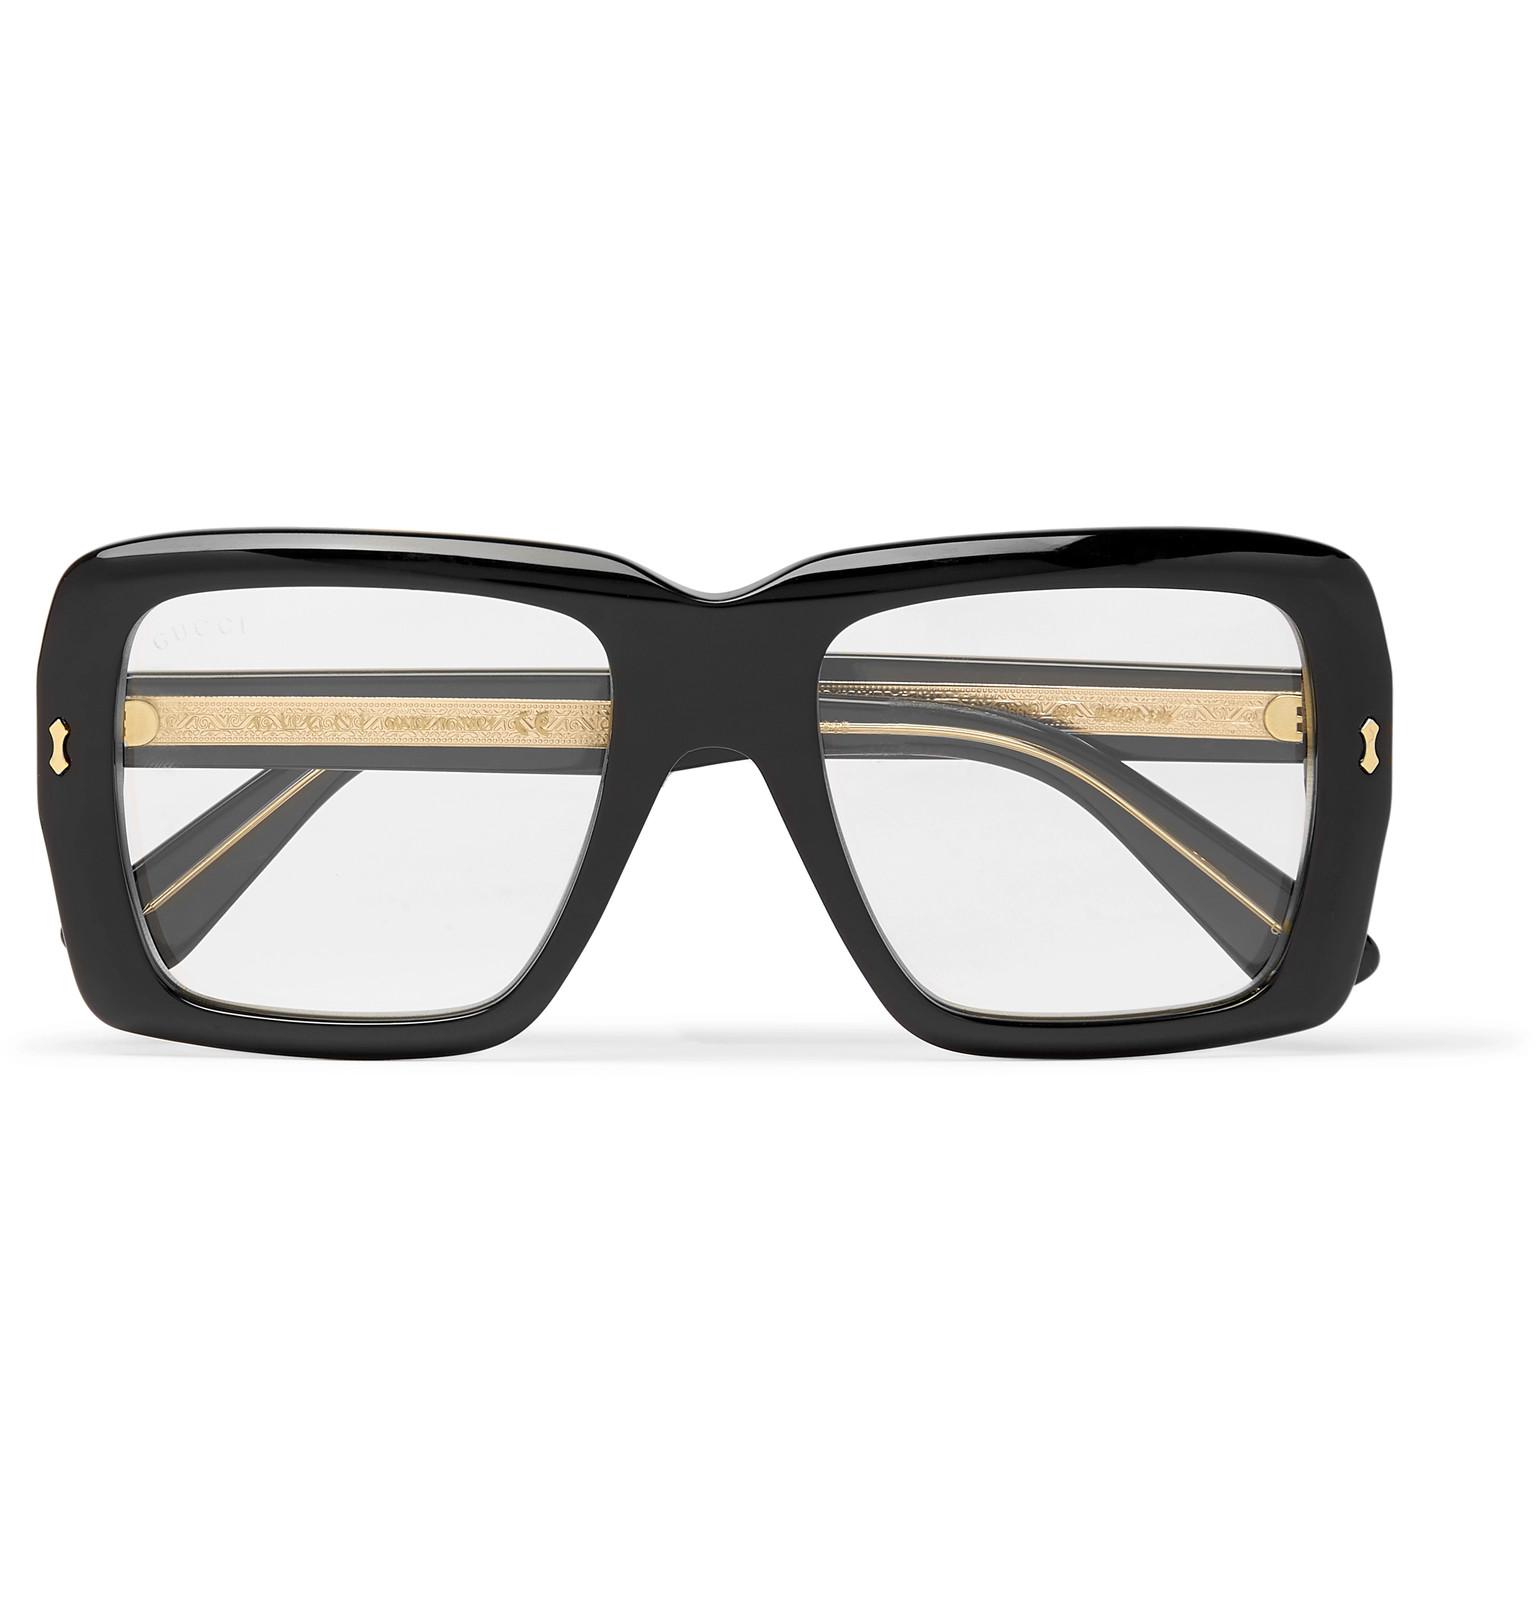 Top 83+ imagen glasses frames gucci - Abzlocal.mx